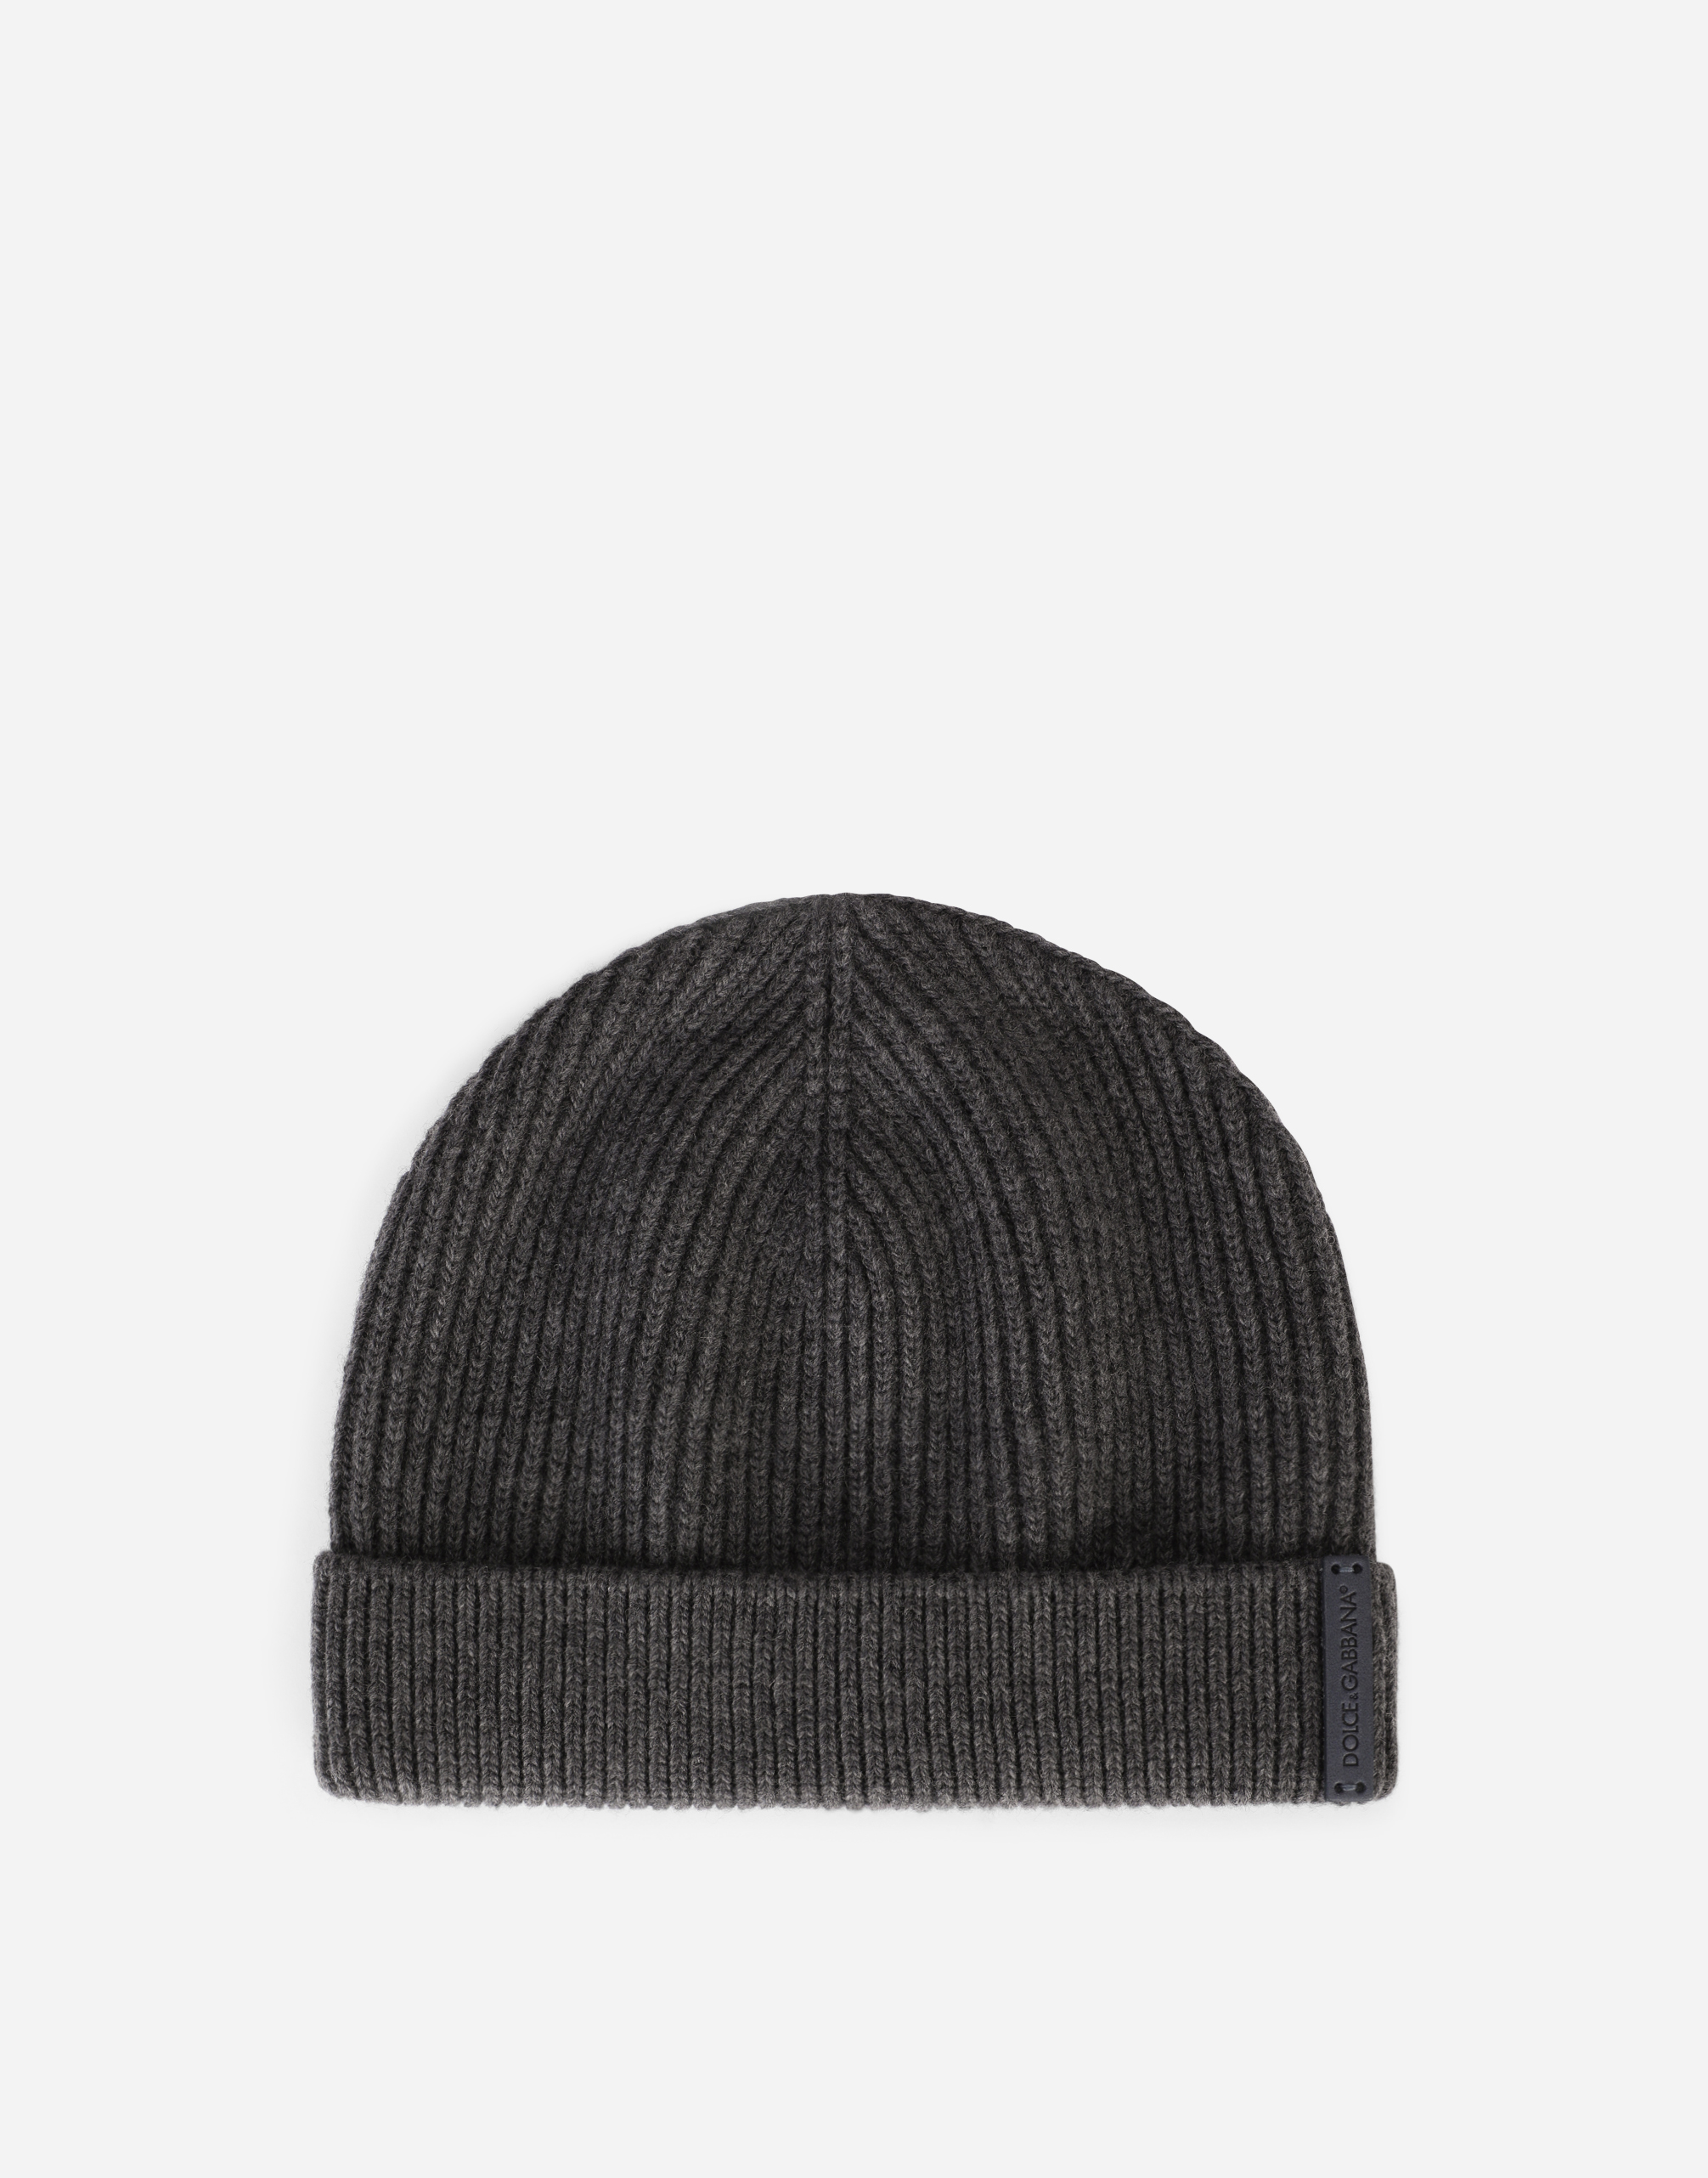 Wool fisherman’s rib knit hat in Grey